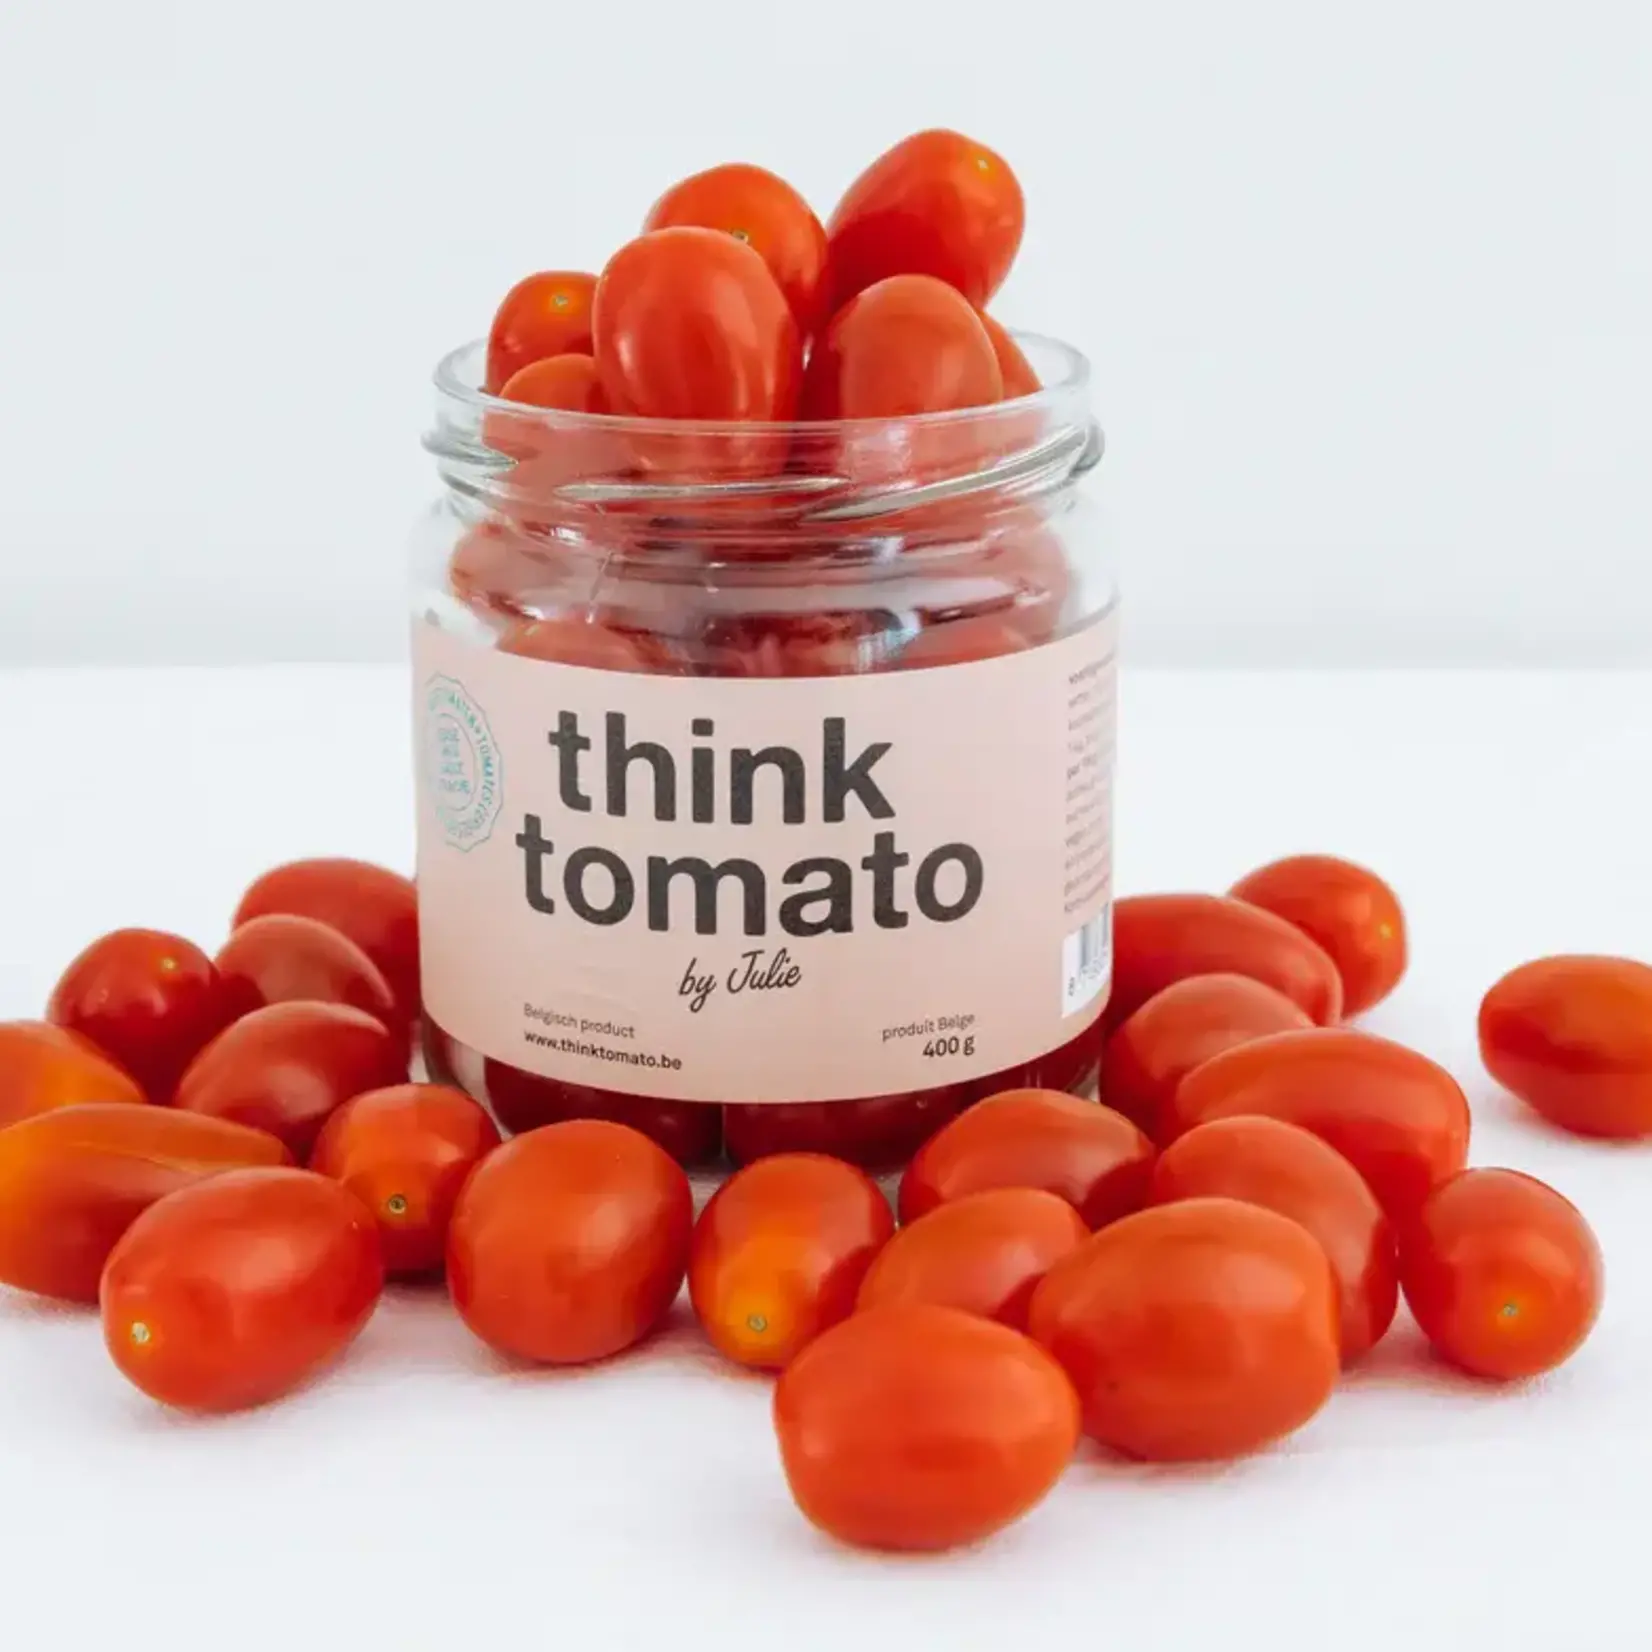 think tomato THINK TOMATO - ORIGINAL BY JULIE